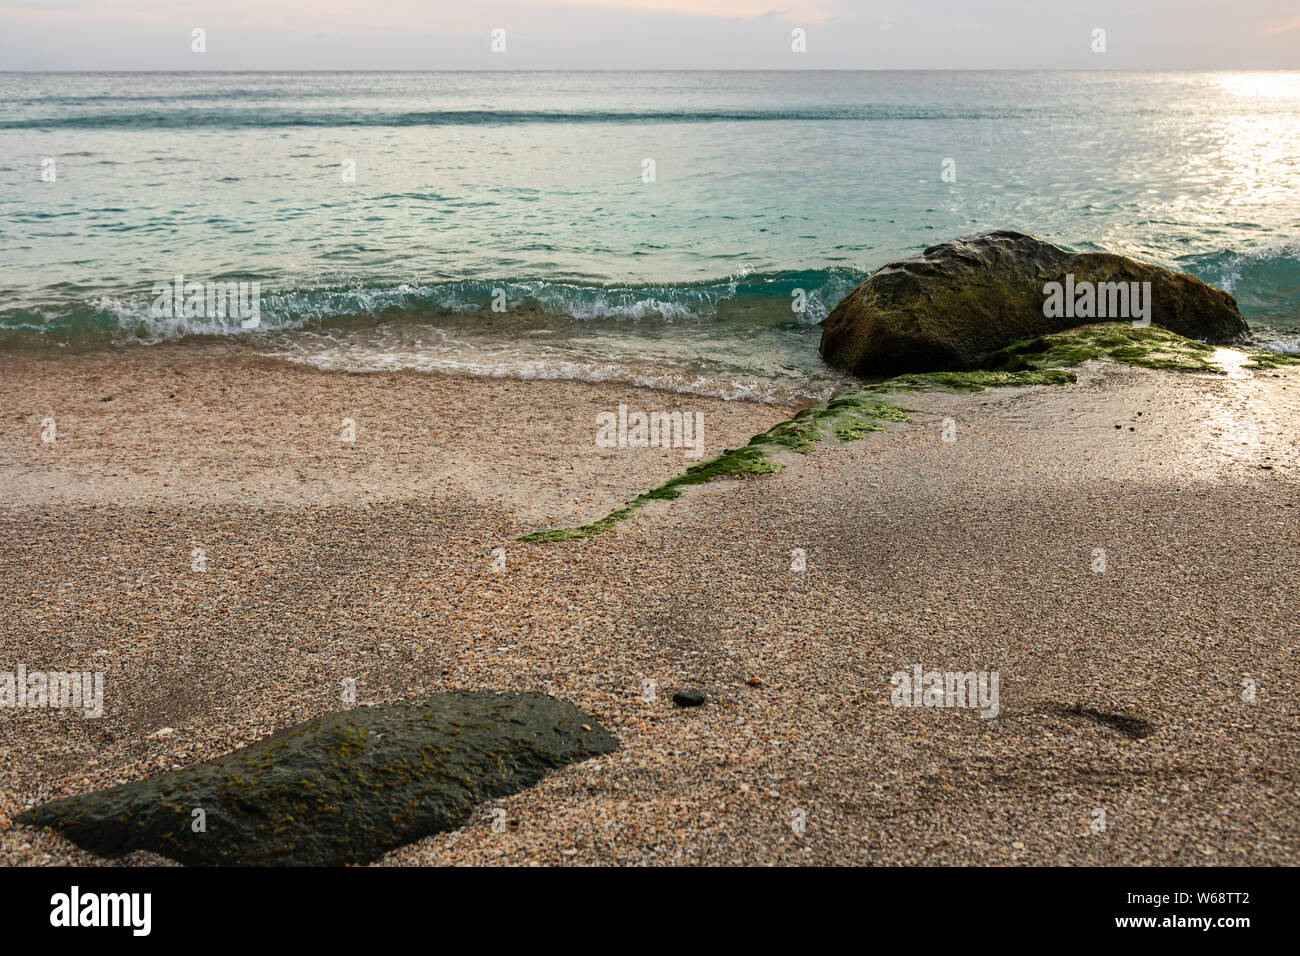 Die berühmte Shell Beach, St. Barth's Island (St. Bart's Island) Karibik. Stockfoto